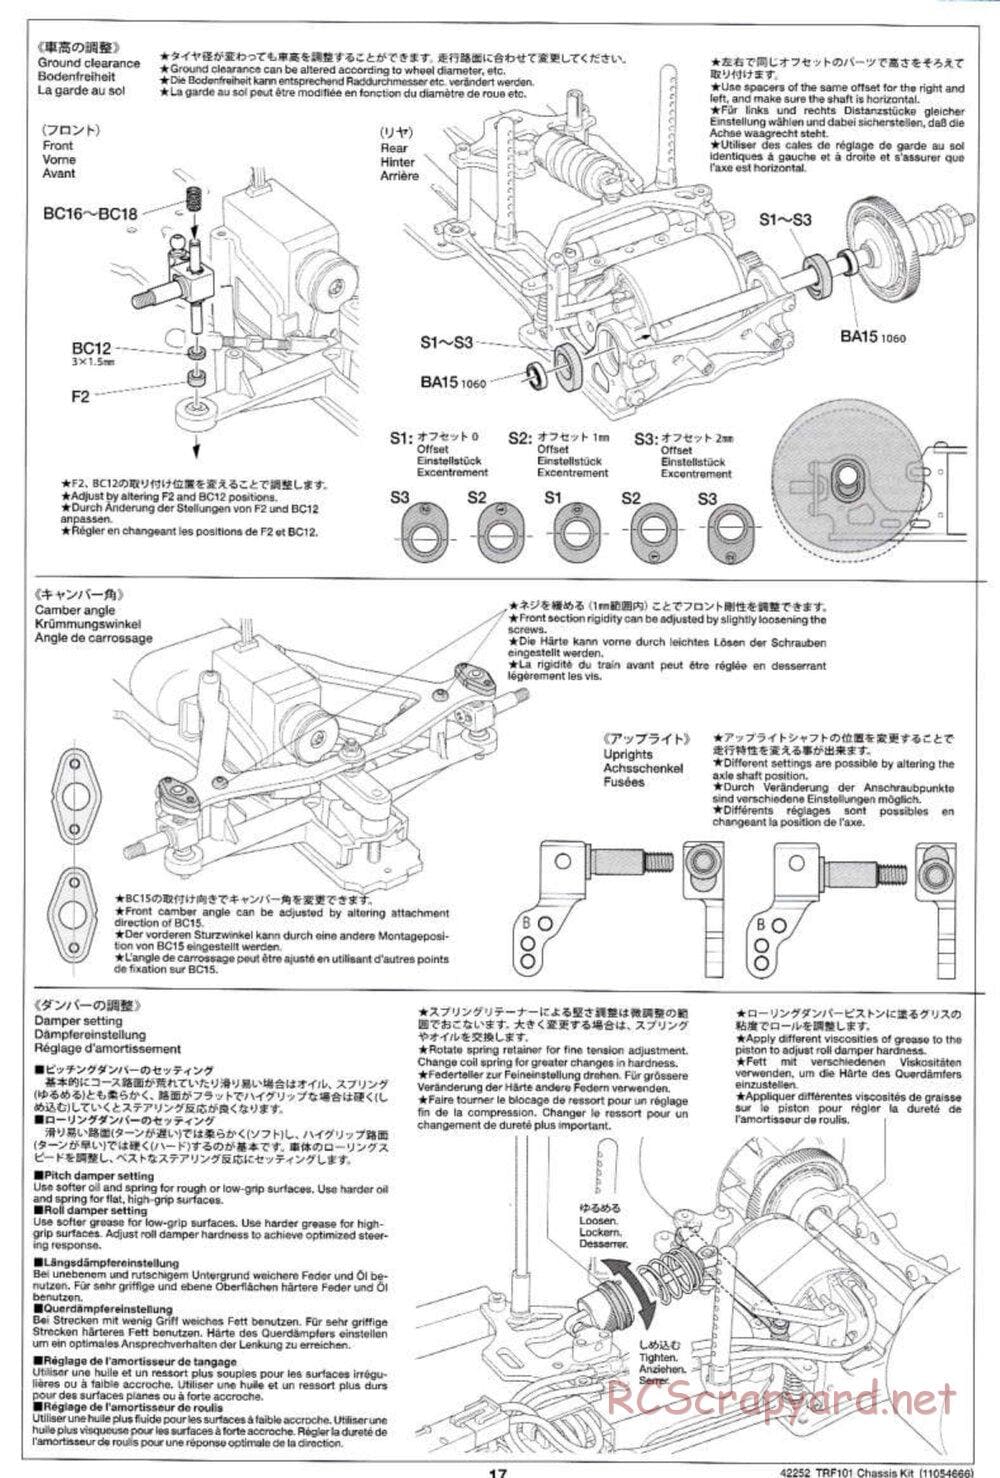 Tamiya - TRF101 Chassis - Manual - Page 17